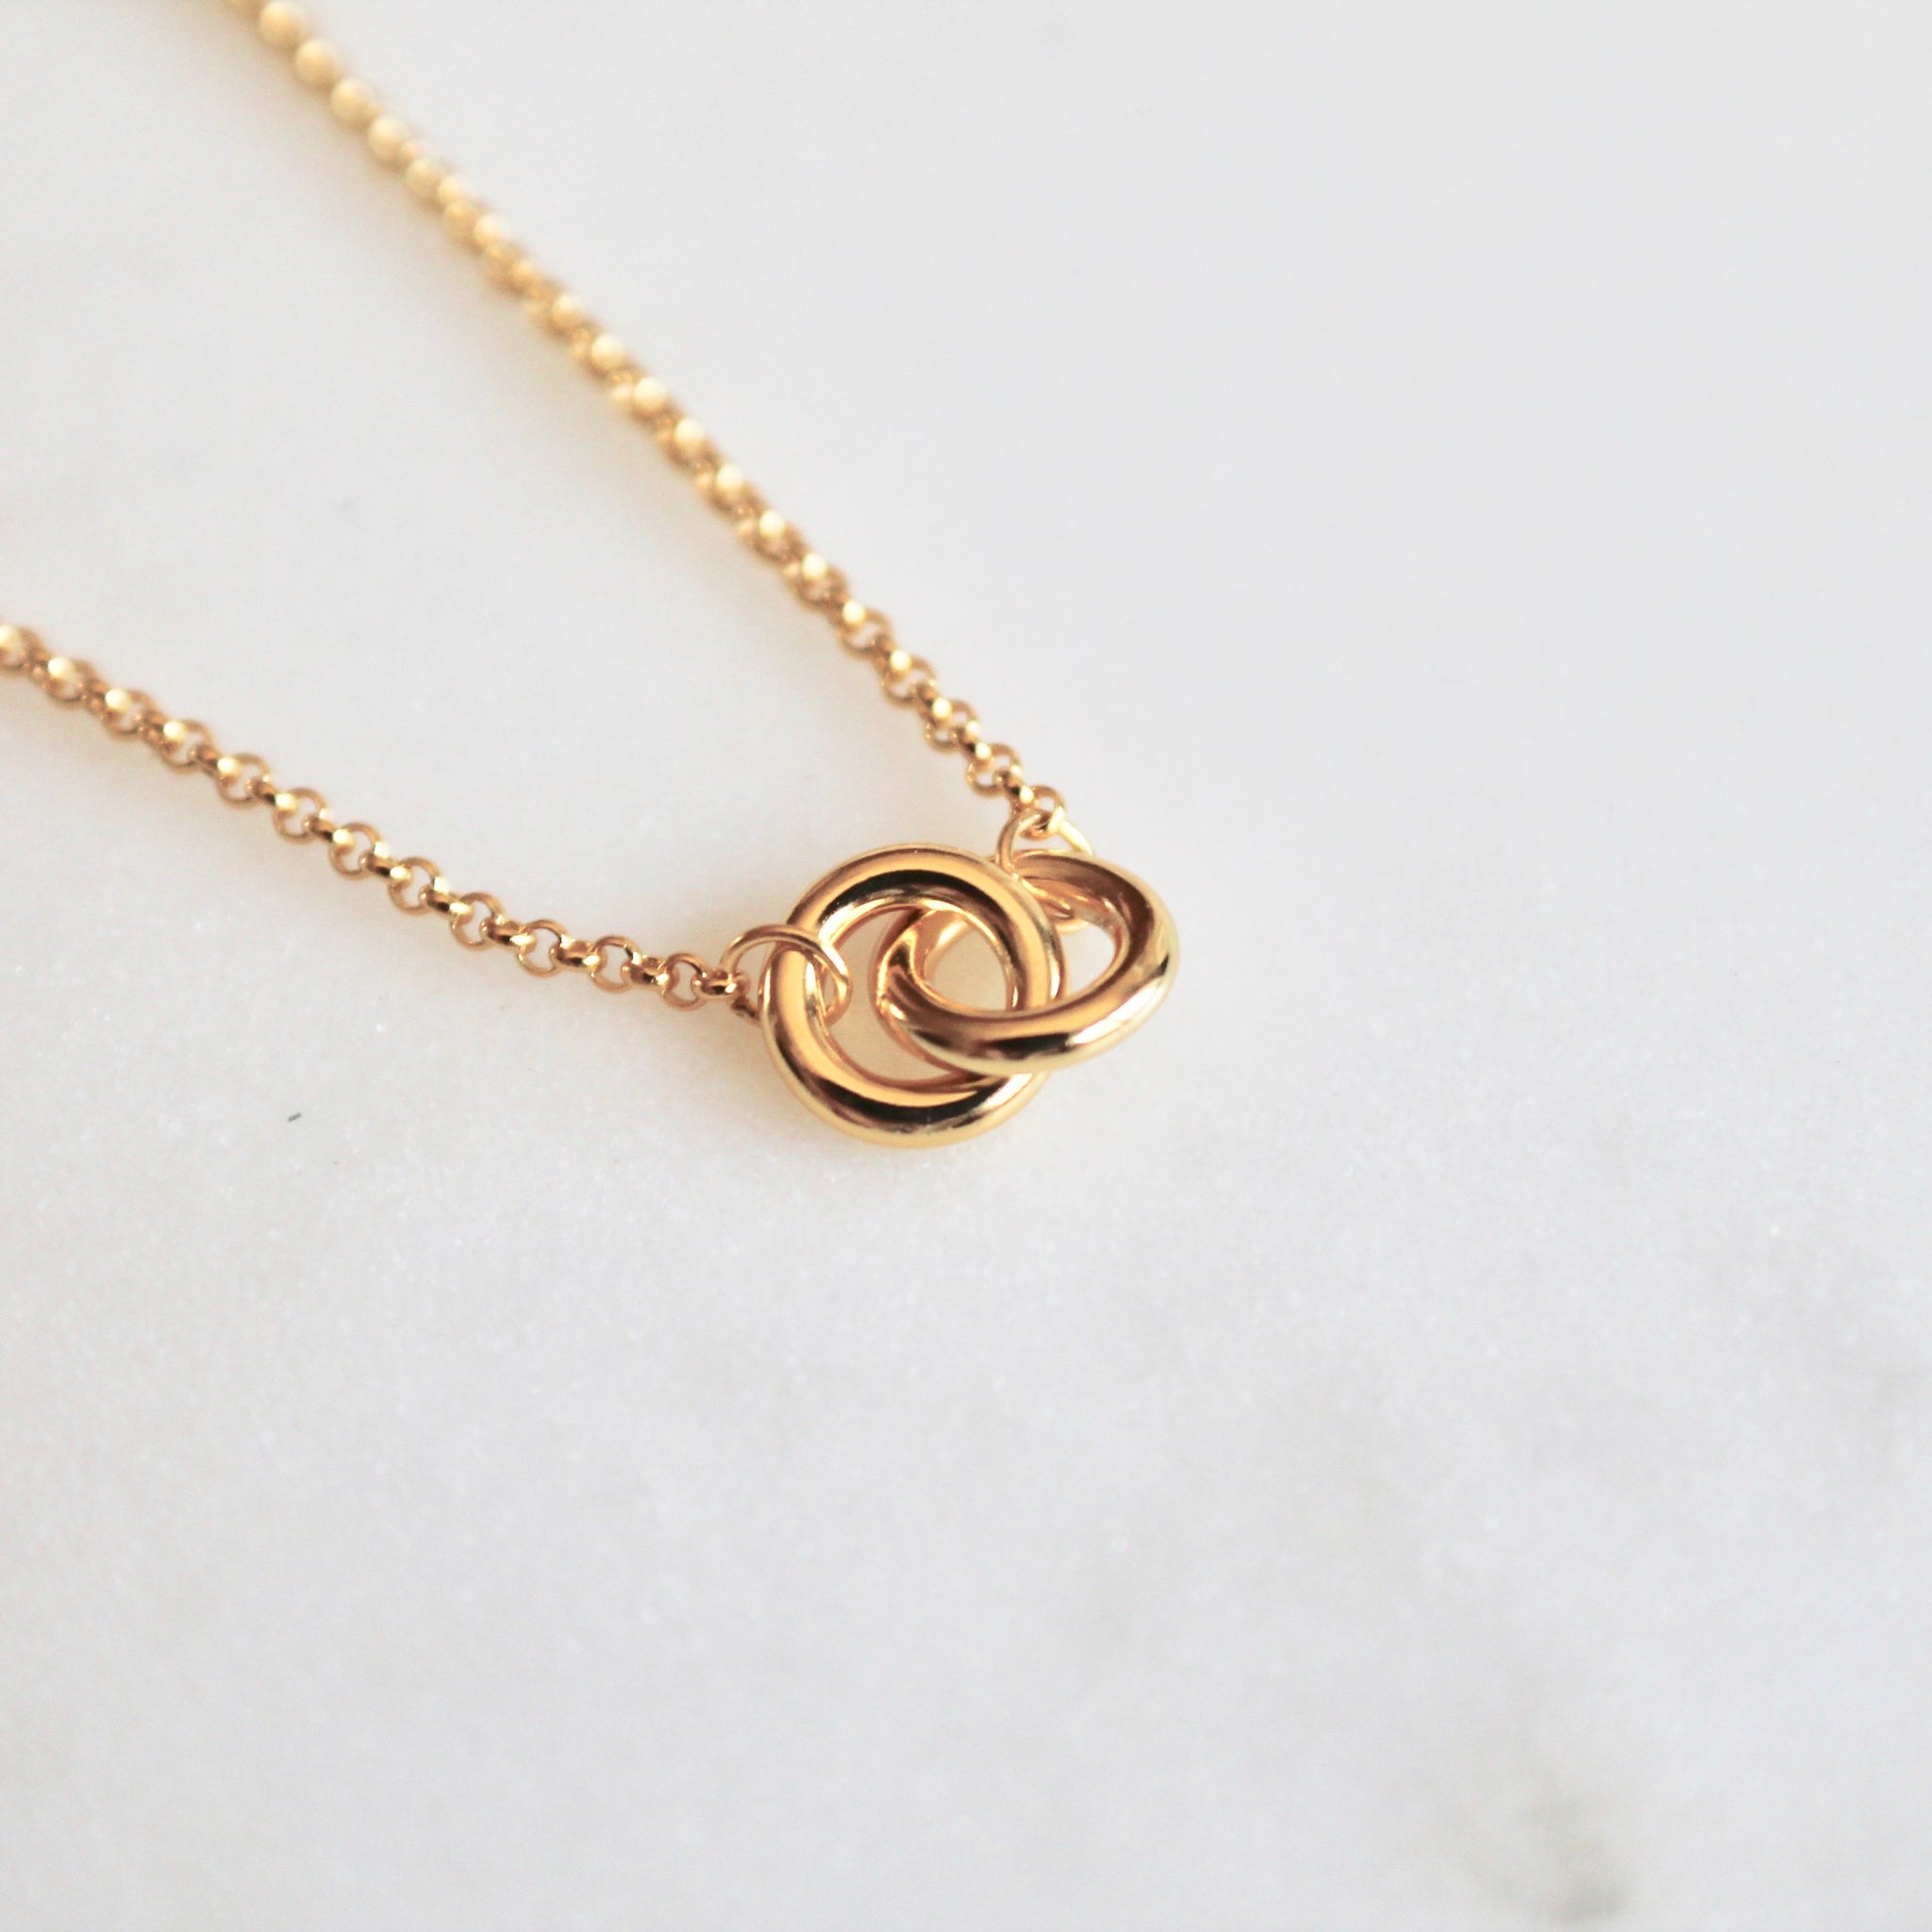 Interlocking circles pendant necklace